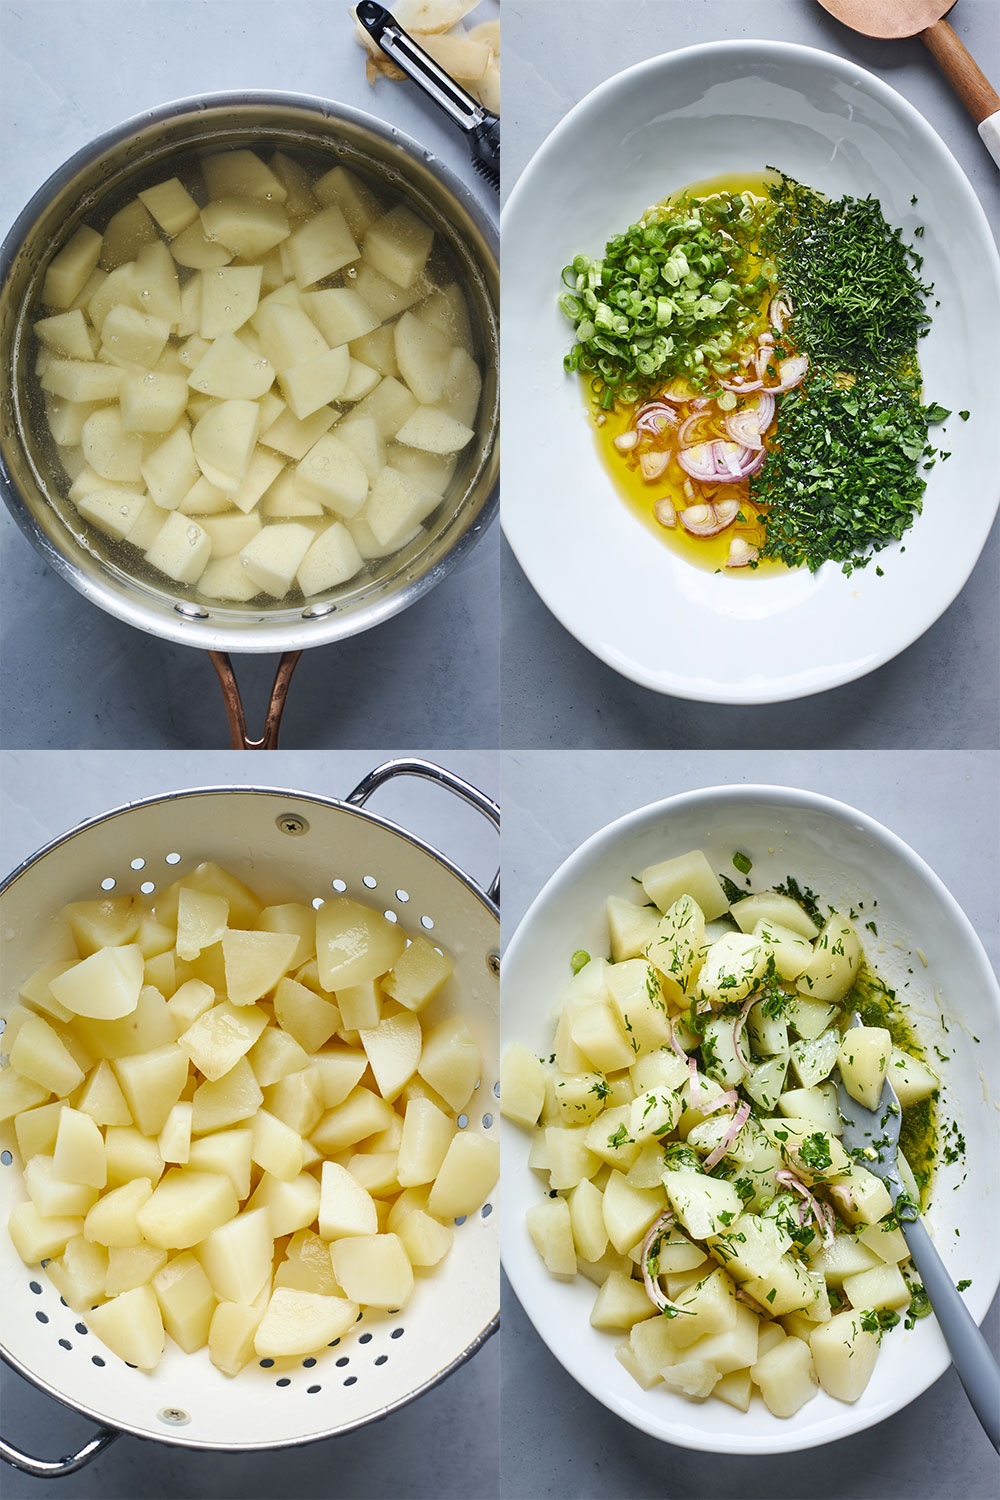 Greek-style potato salad